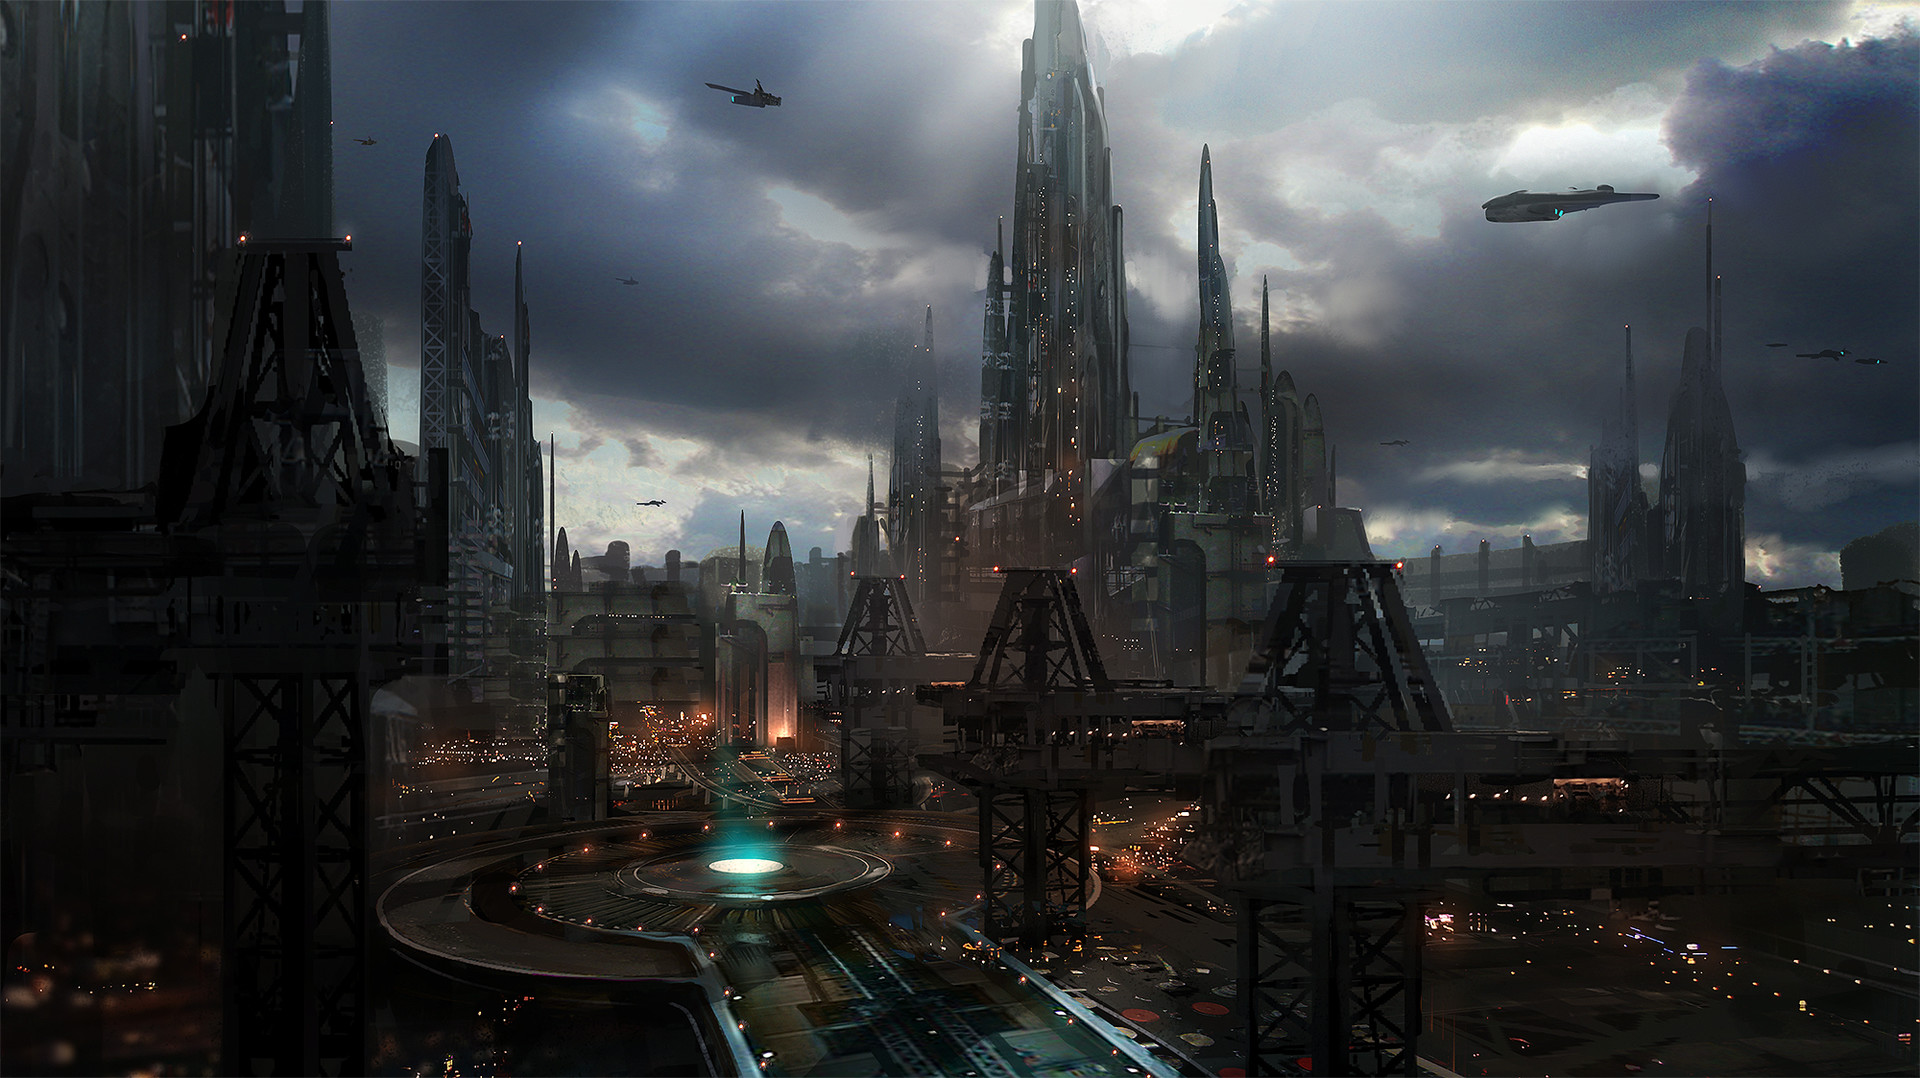 ArtStation - Sci-fi city scape concept art - class demo, James Paick